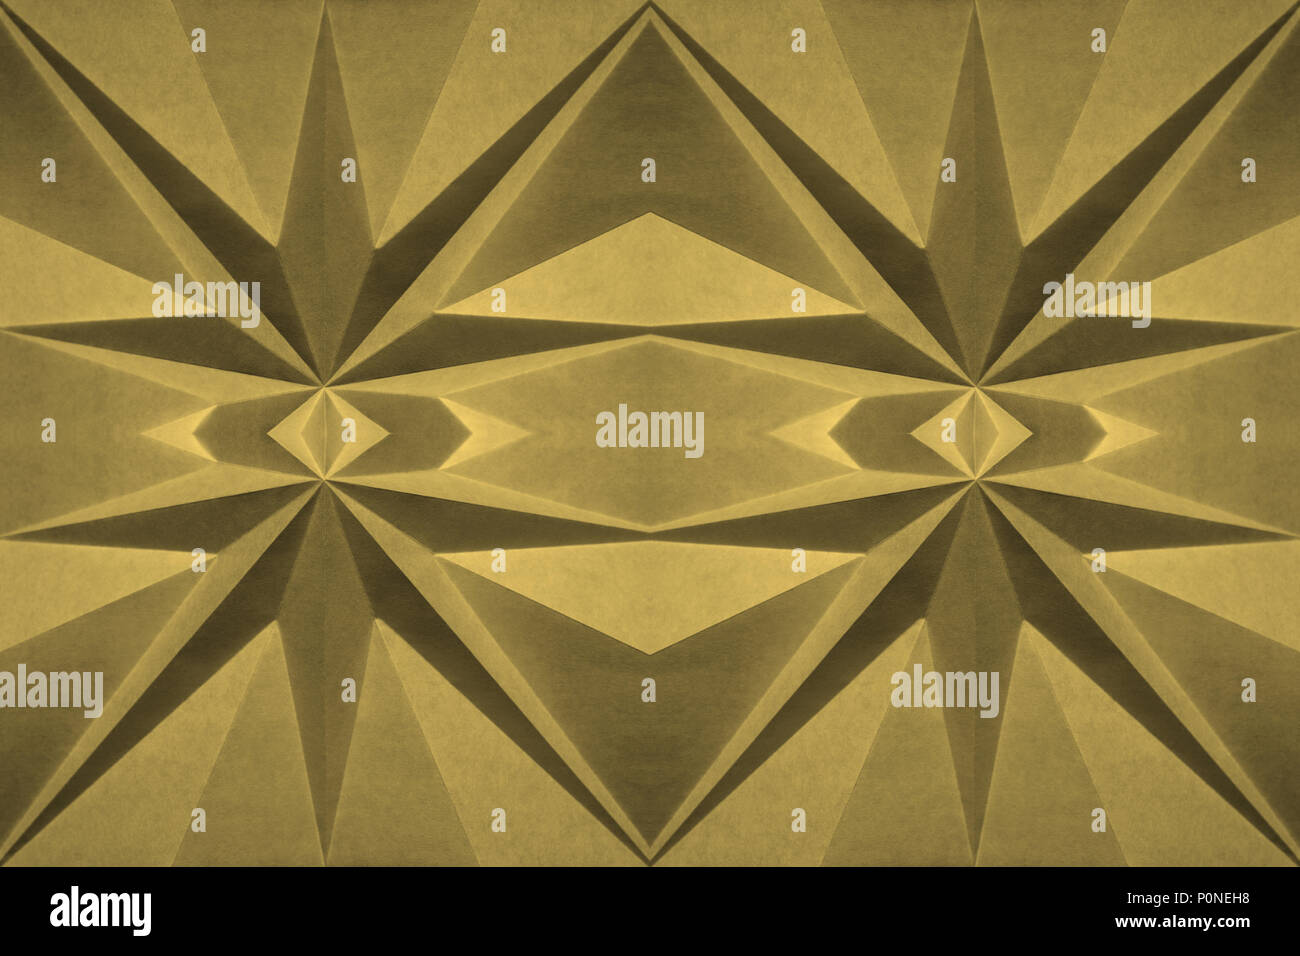 yellow abstract wallpaper background Origami, Bamboo; Pantone 14-0740. Angular monochrome graphic design element. Stock Photo